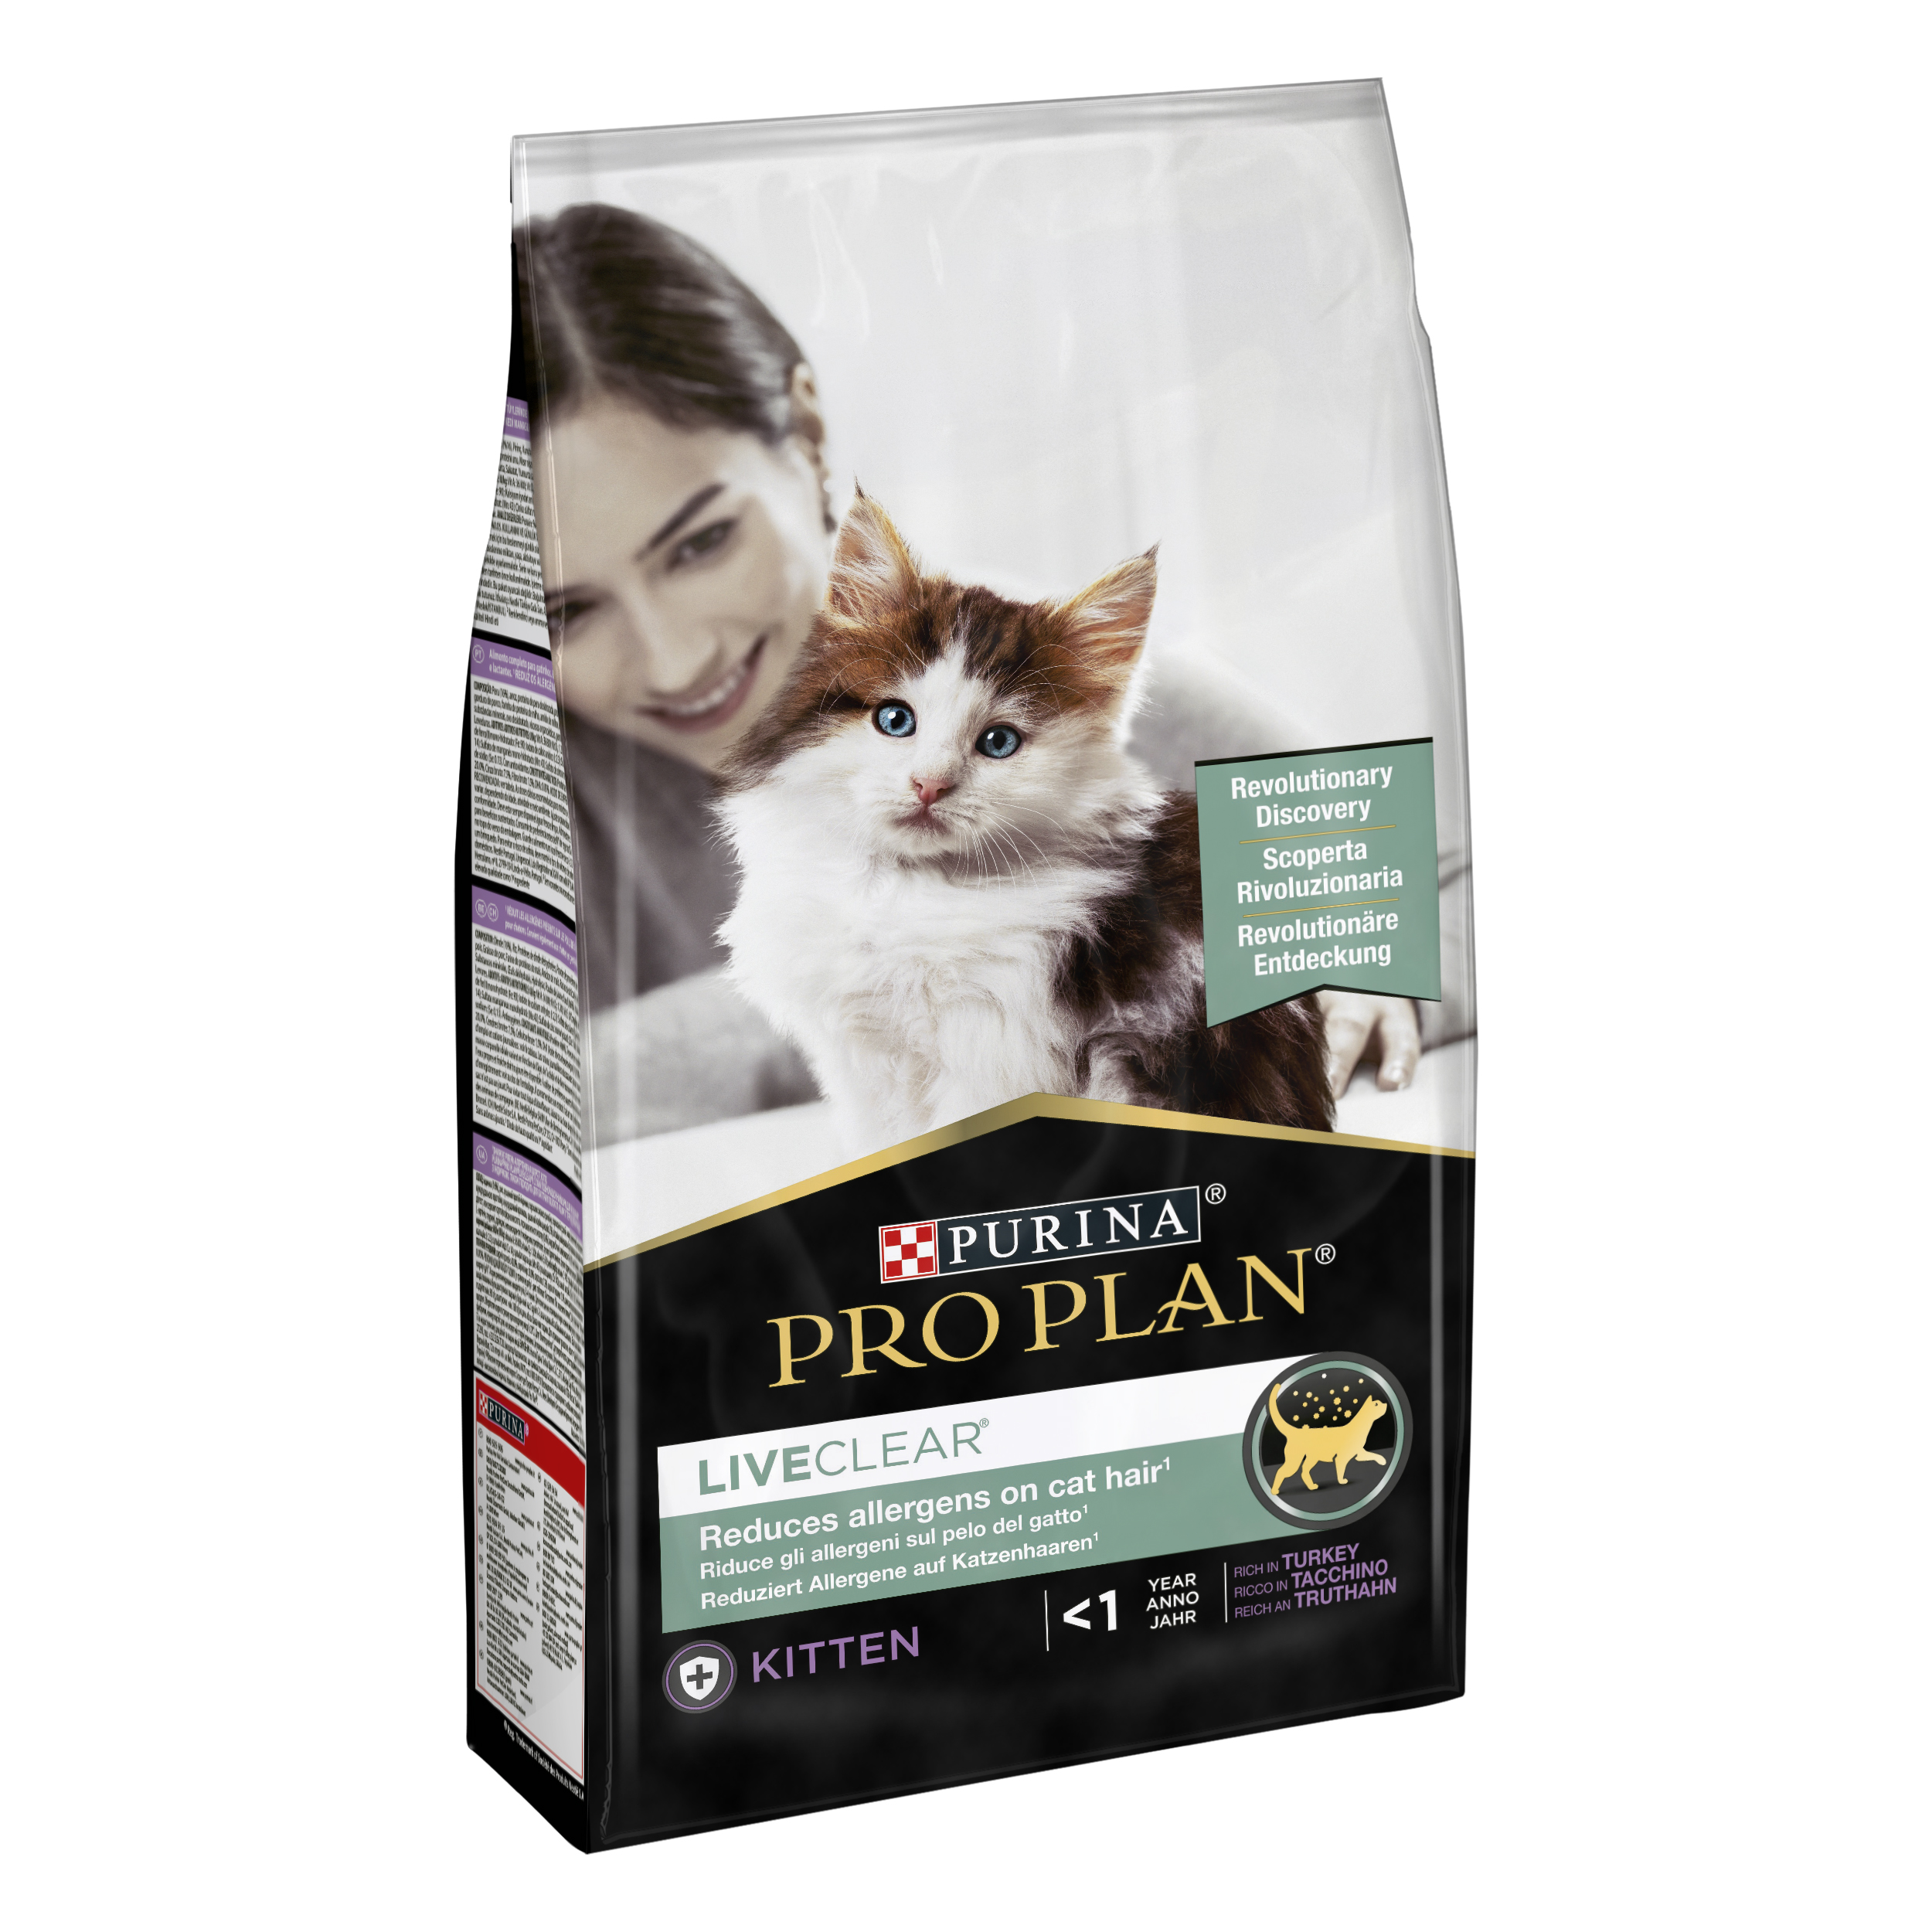 Сухой корм для котят для уменьшения аллергенов на шерсти Purina Pro Plan LiveClear Kitten, с индейкой, 1,4 кг (12466185) - фото 2